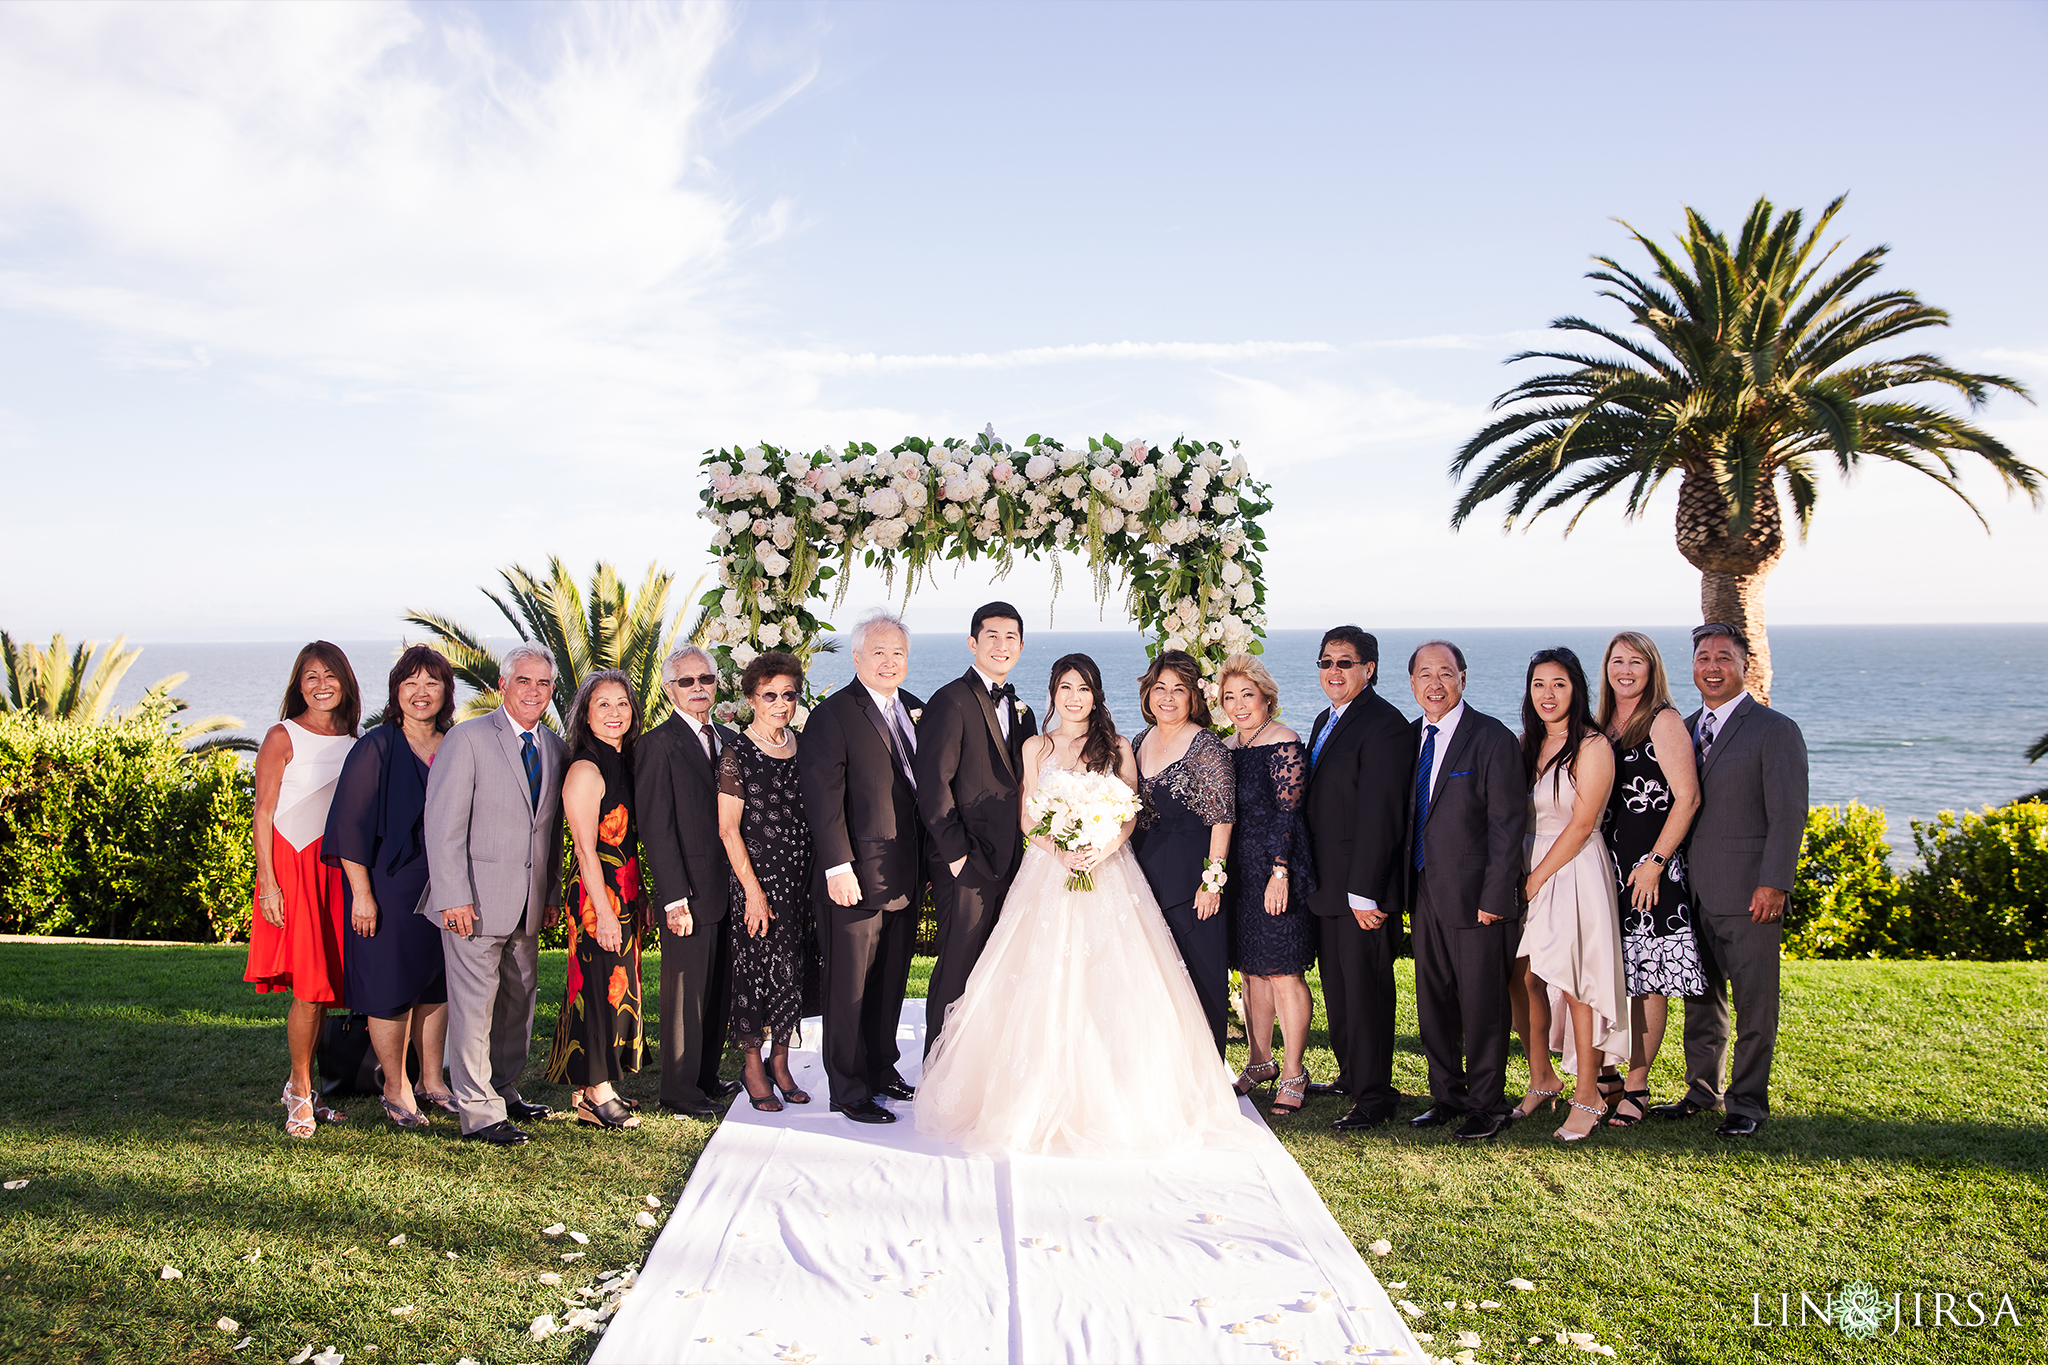 Family Photo Bel Air Bay Club Los Angeles Wedding Photography